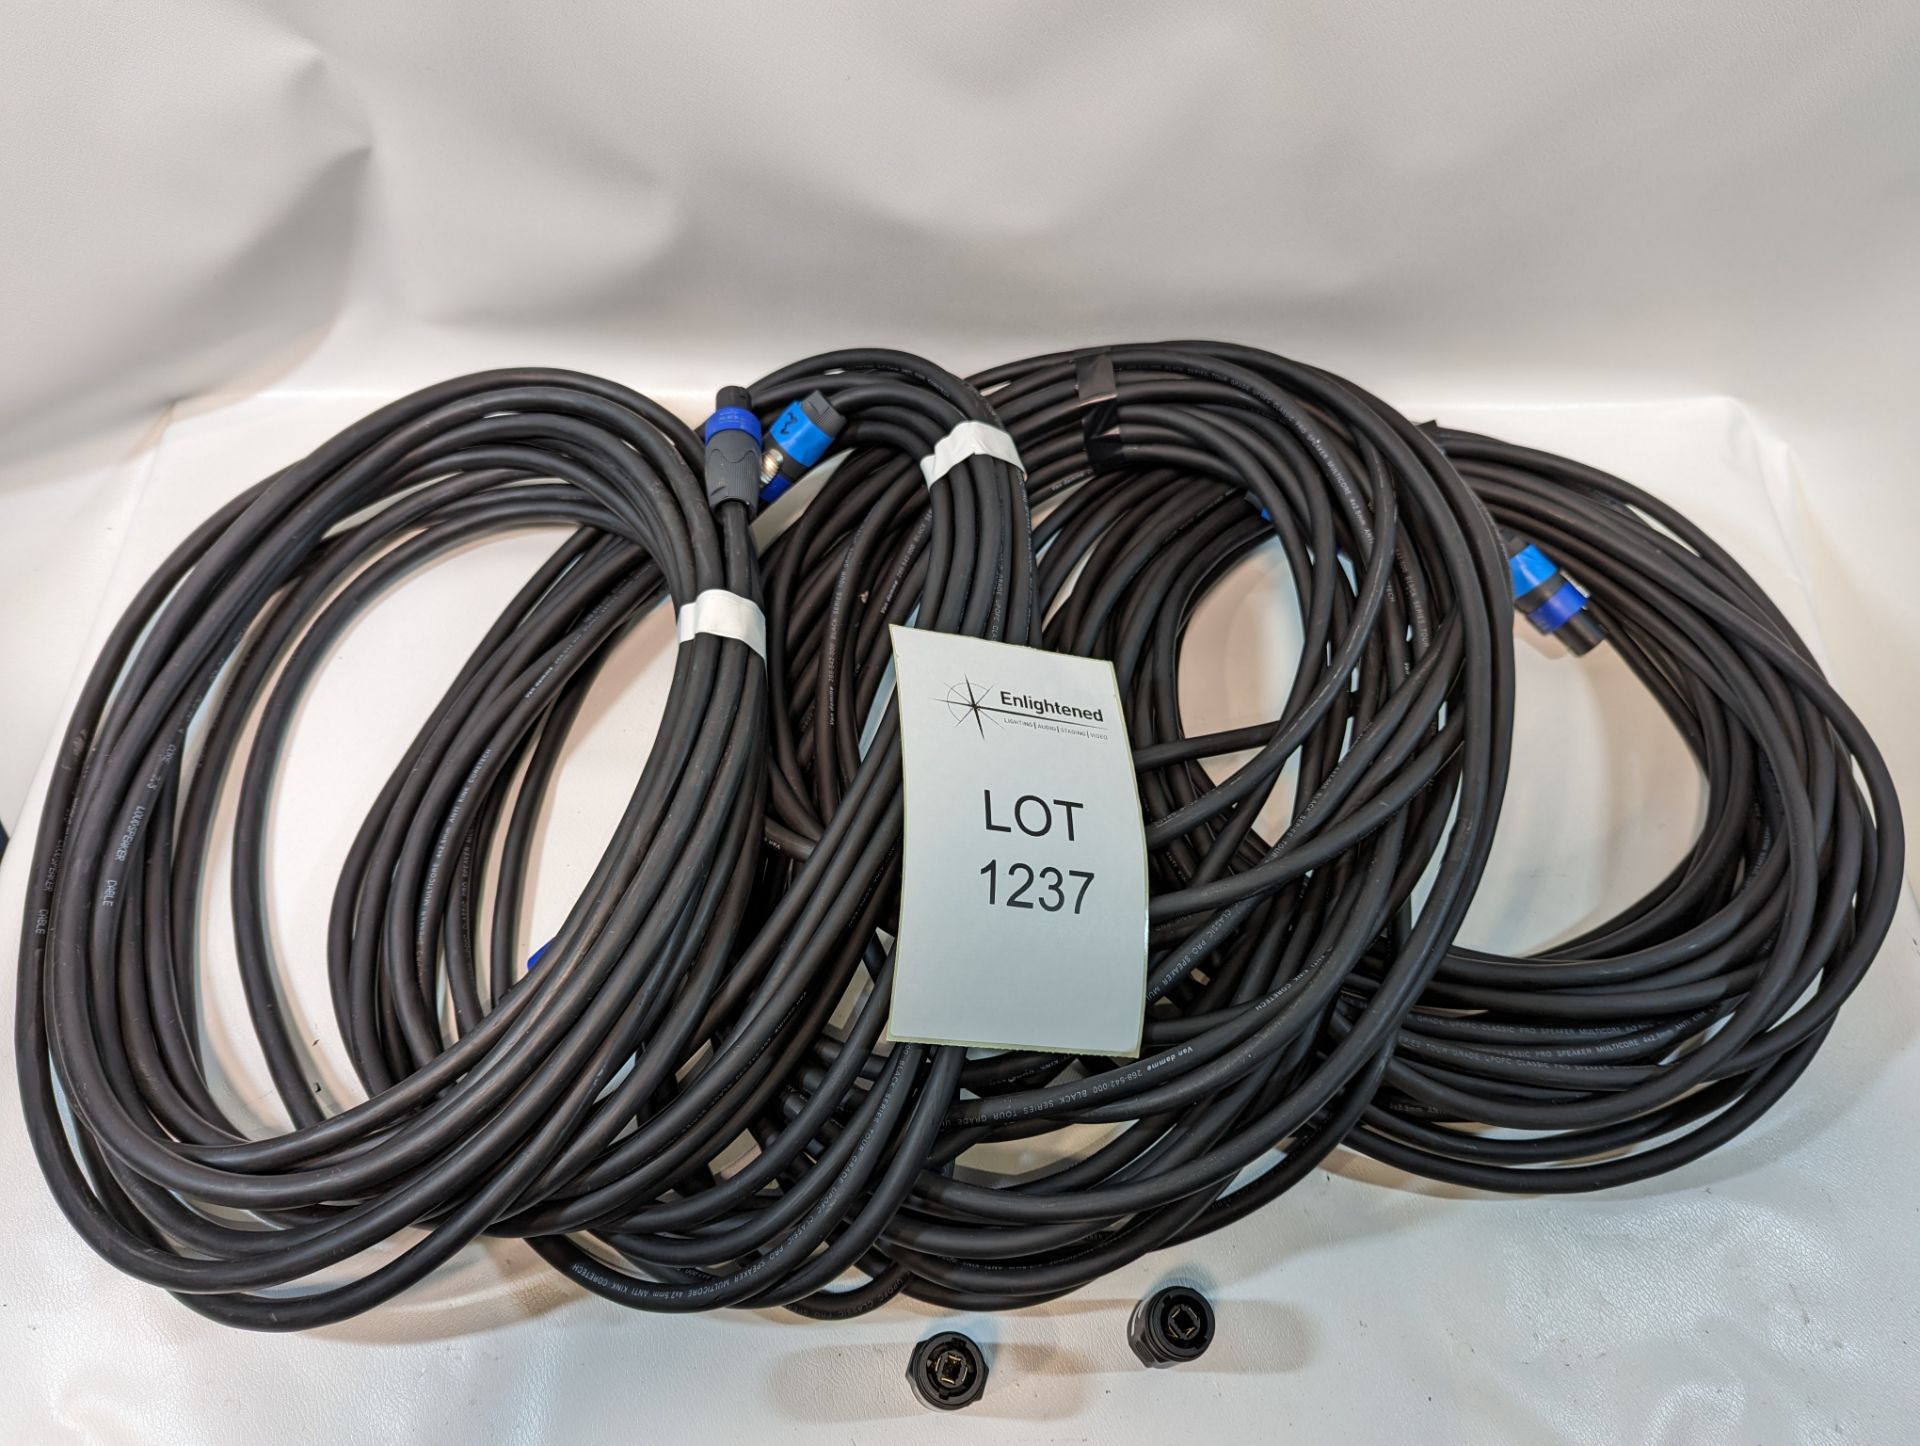 NL4 SpeakON Cables